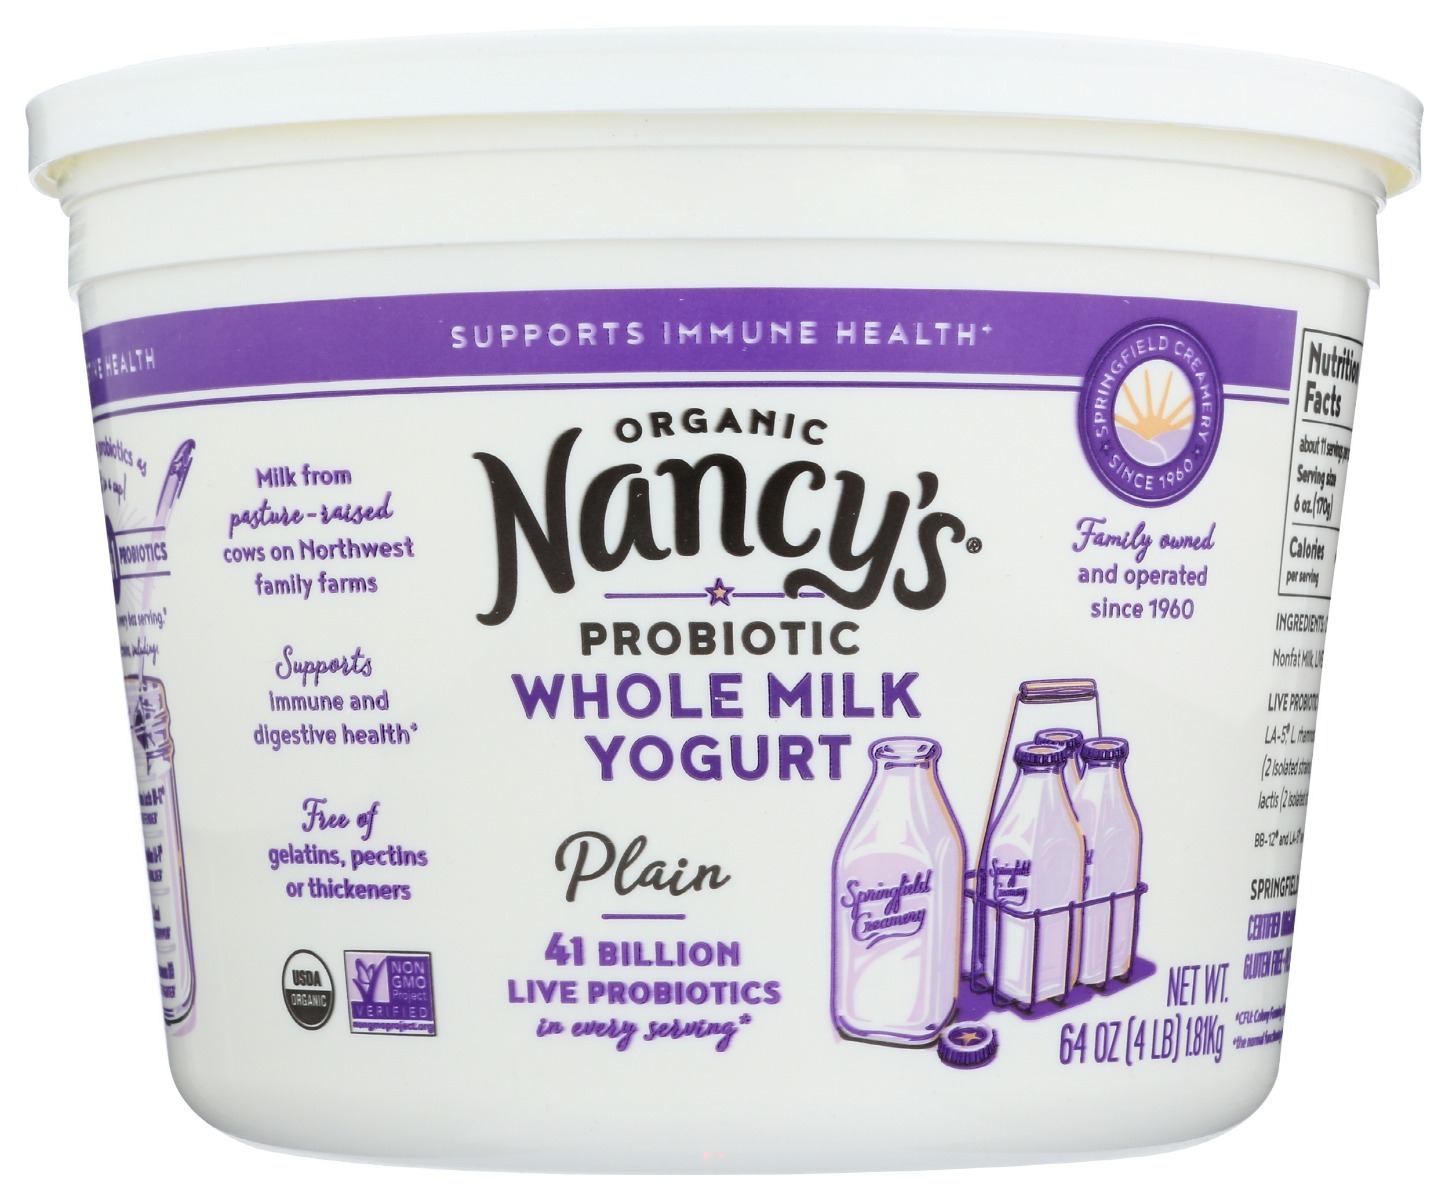 Plain Organic Probiotic Whole Milk Yogurt, Plain - 043192105801